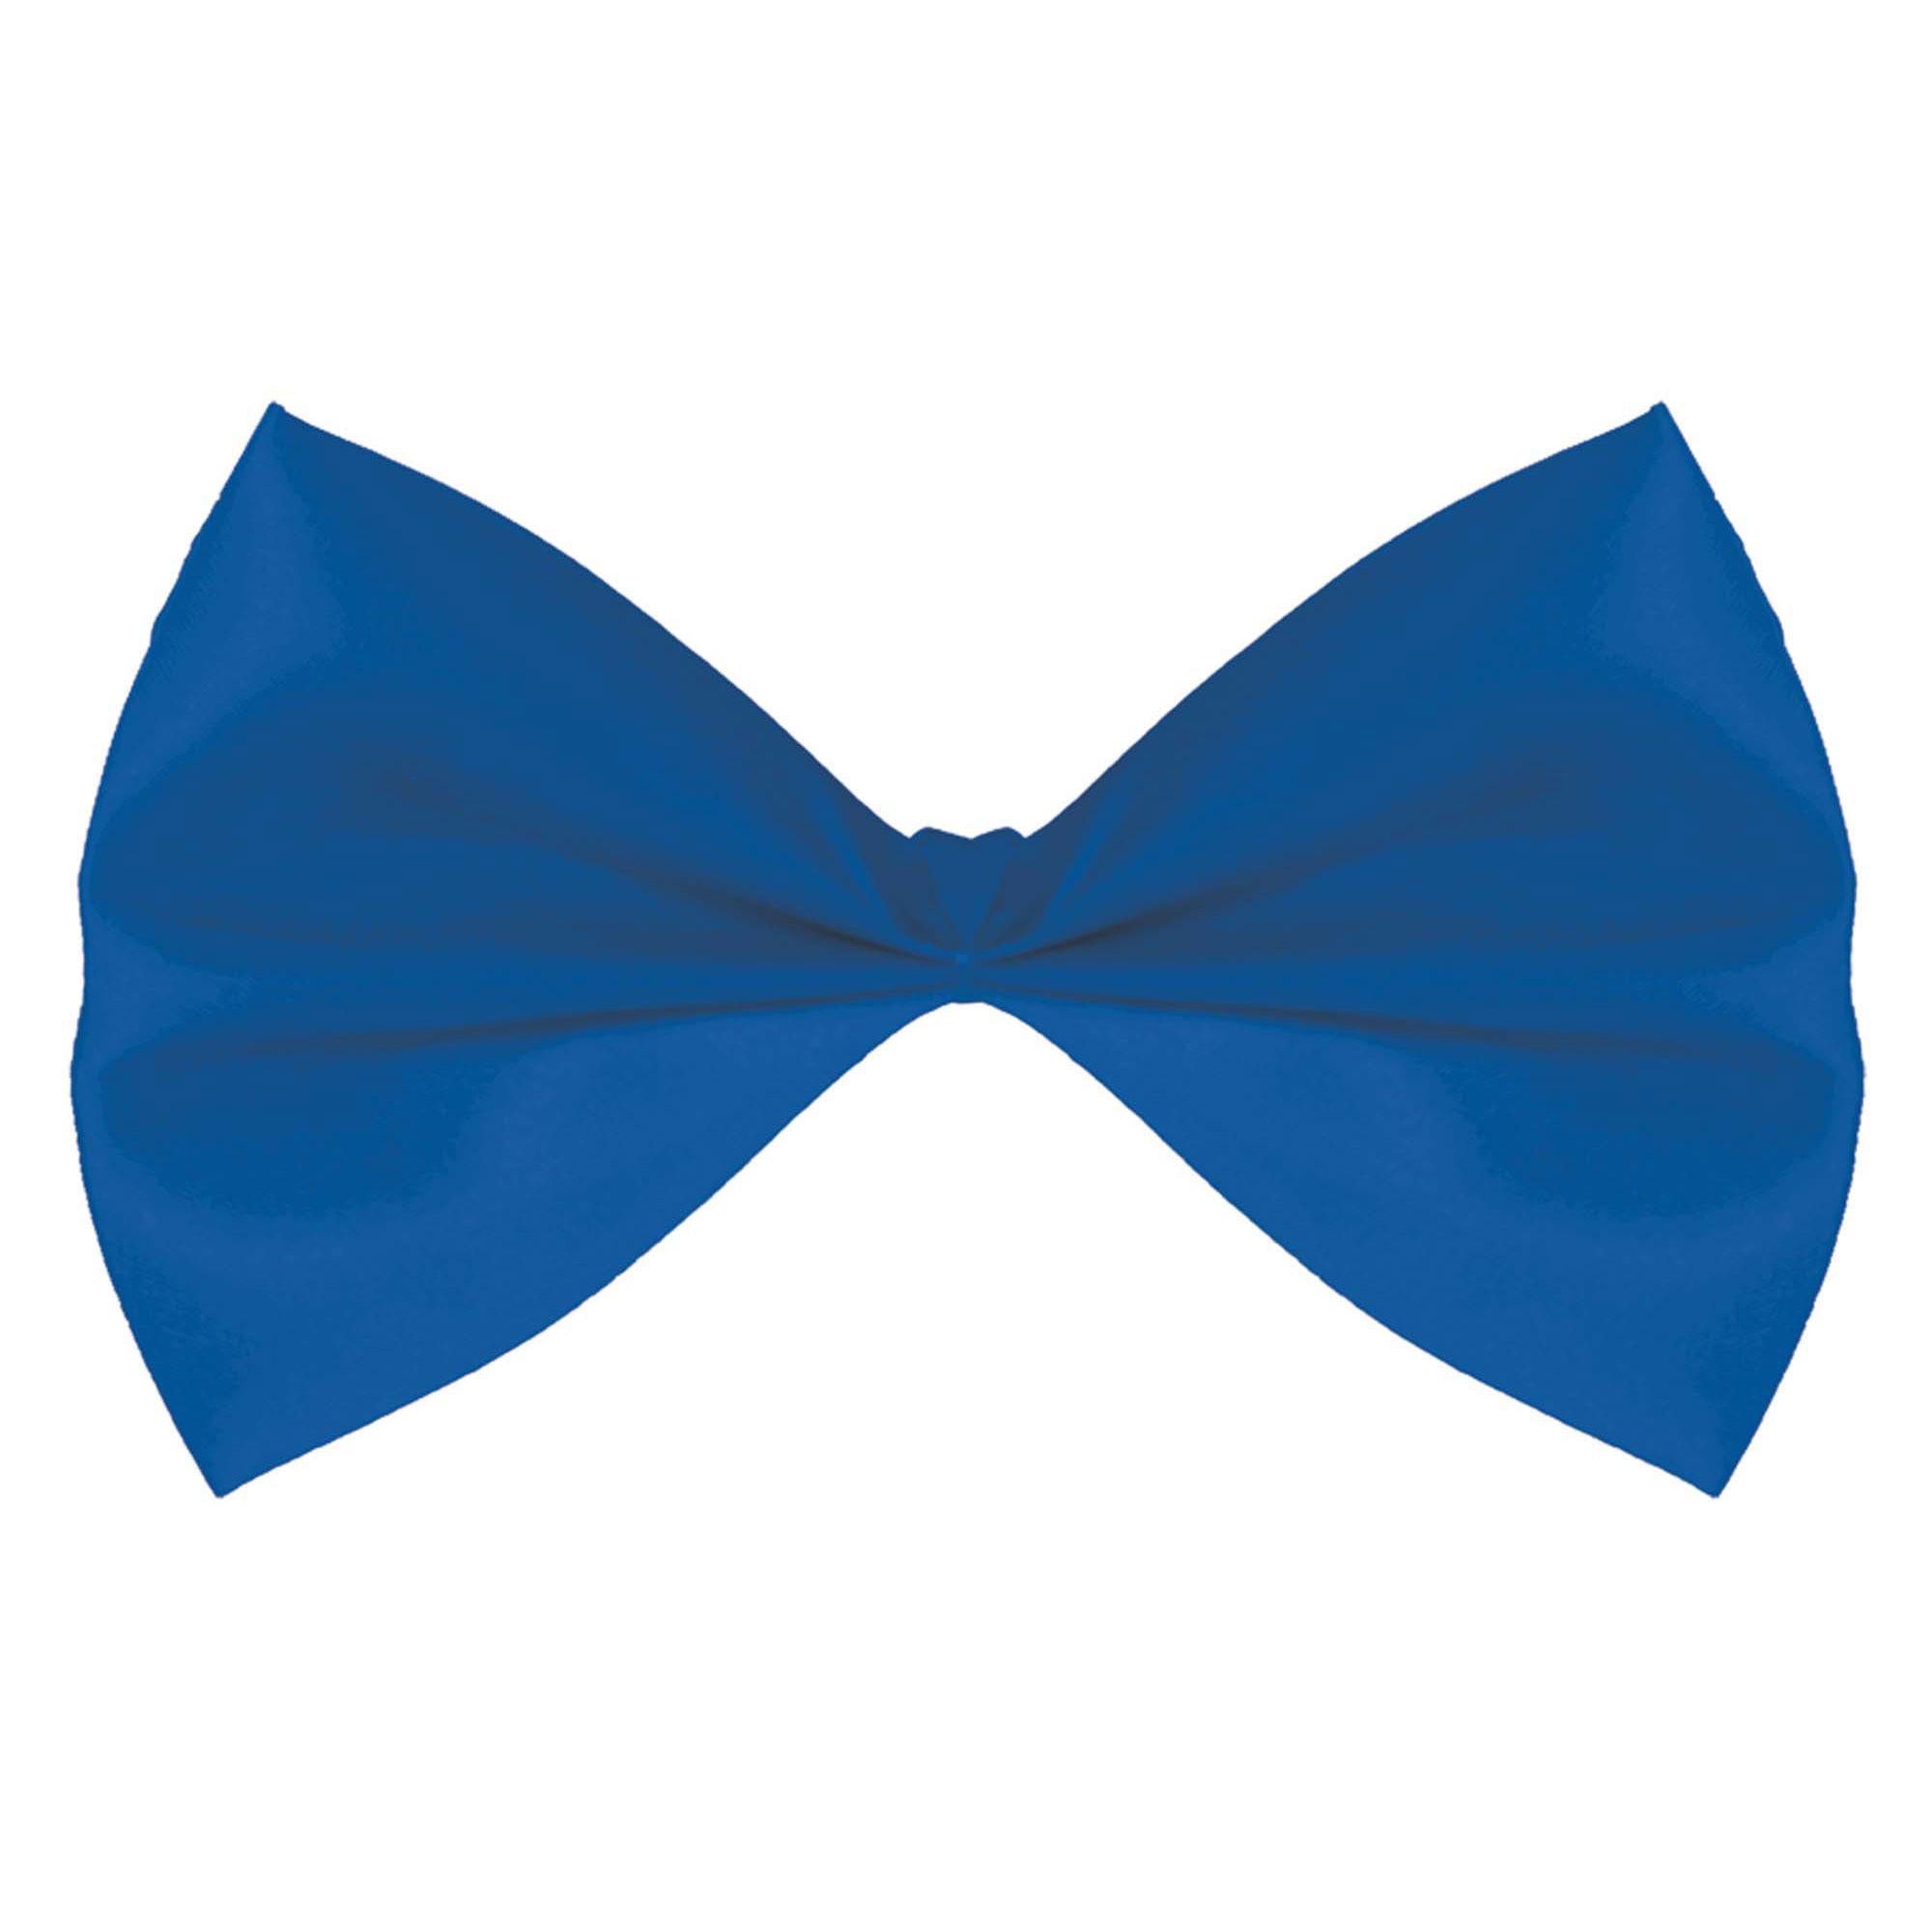 Bow Tie Blue Costumes & Apparel - Party Centre - Party Centre